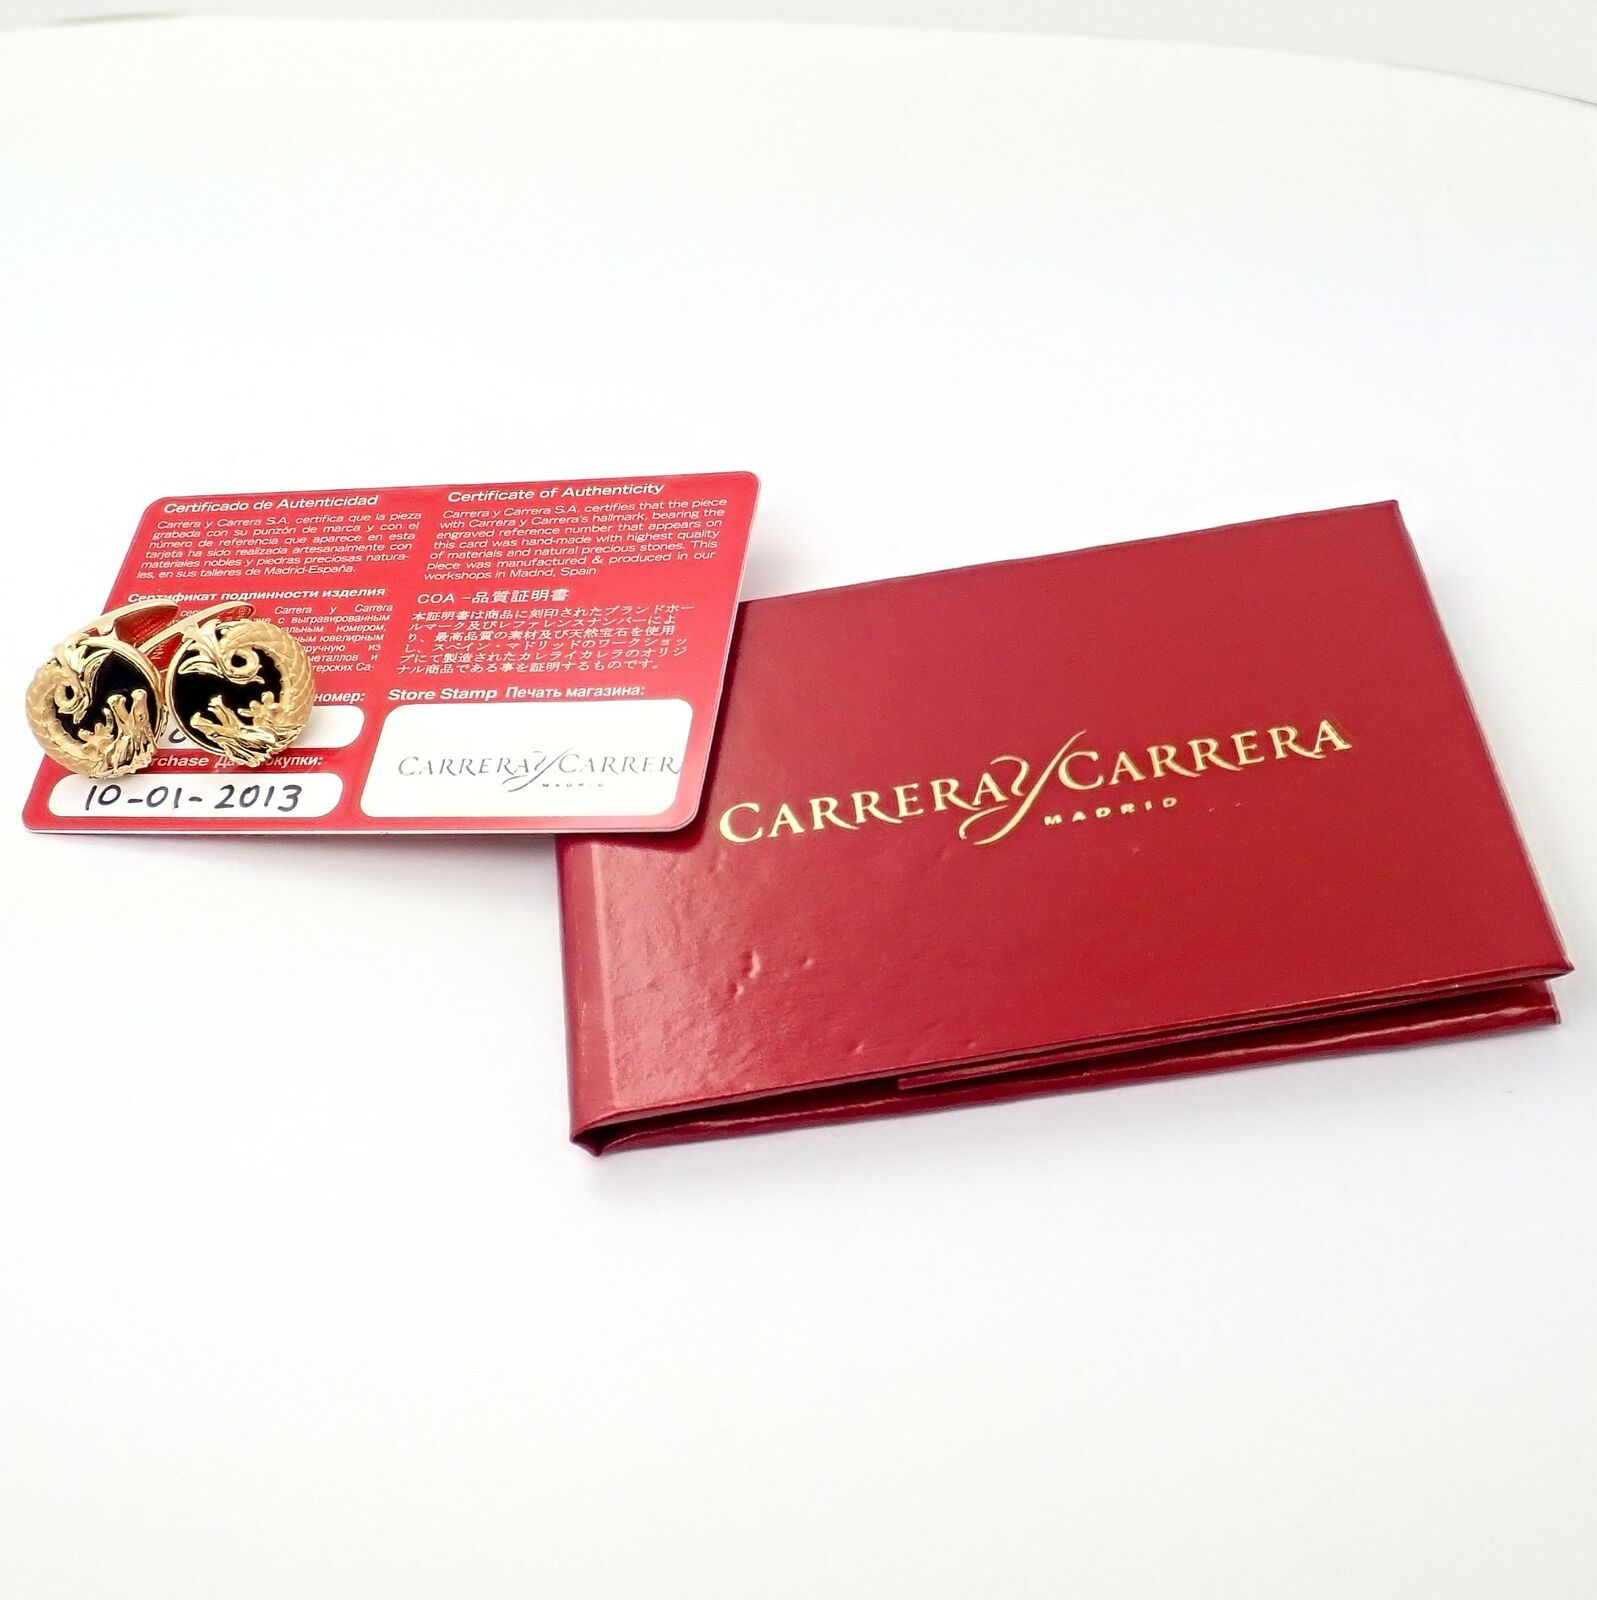 Carrera y Carrera Jewelry & Watches:Men's Jewelry:Cufflinks Authentic! Carrera Y Carrera 18k Yellow Gold Dragon Onyx Cufflinks